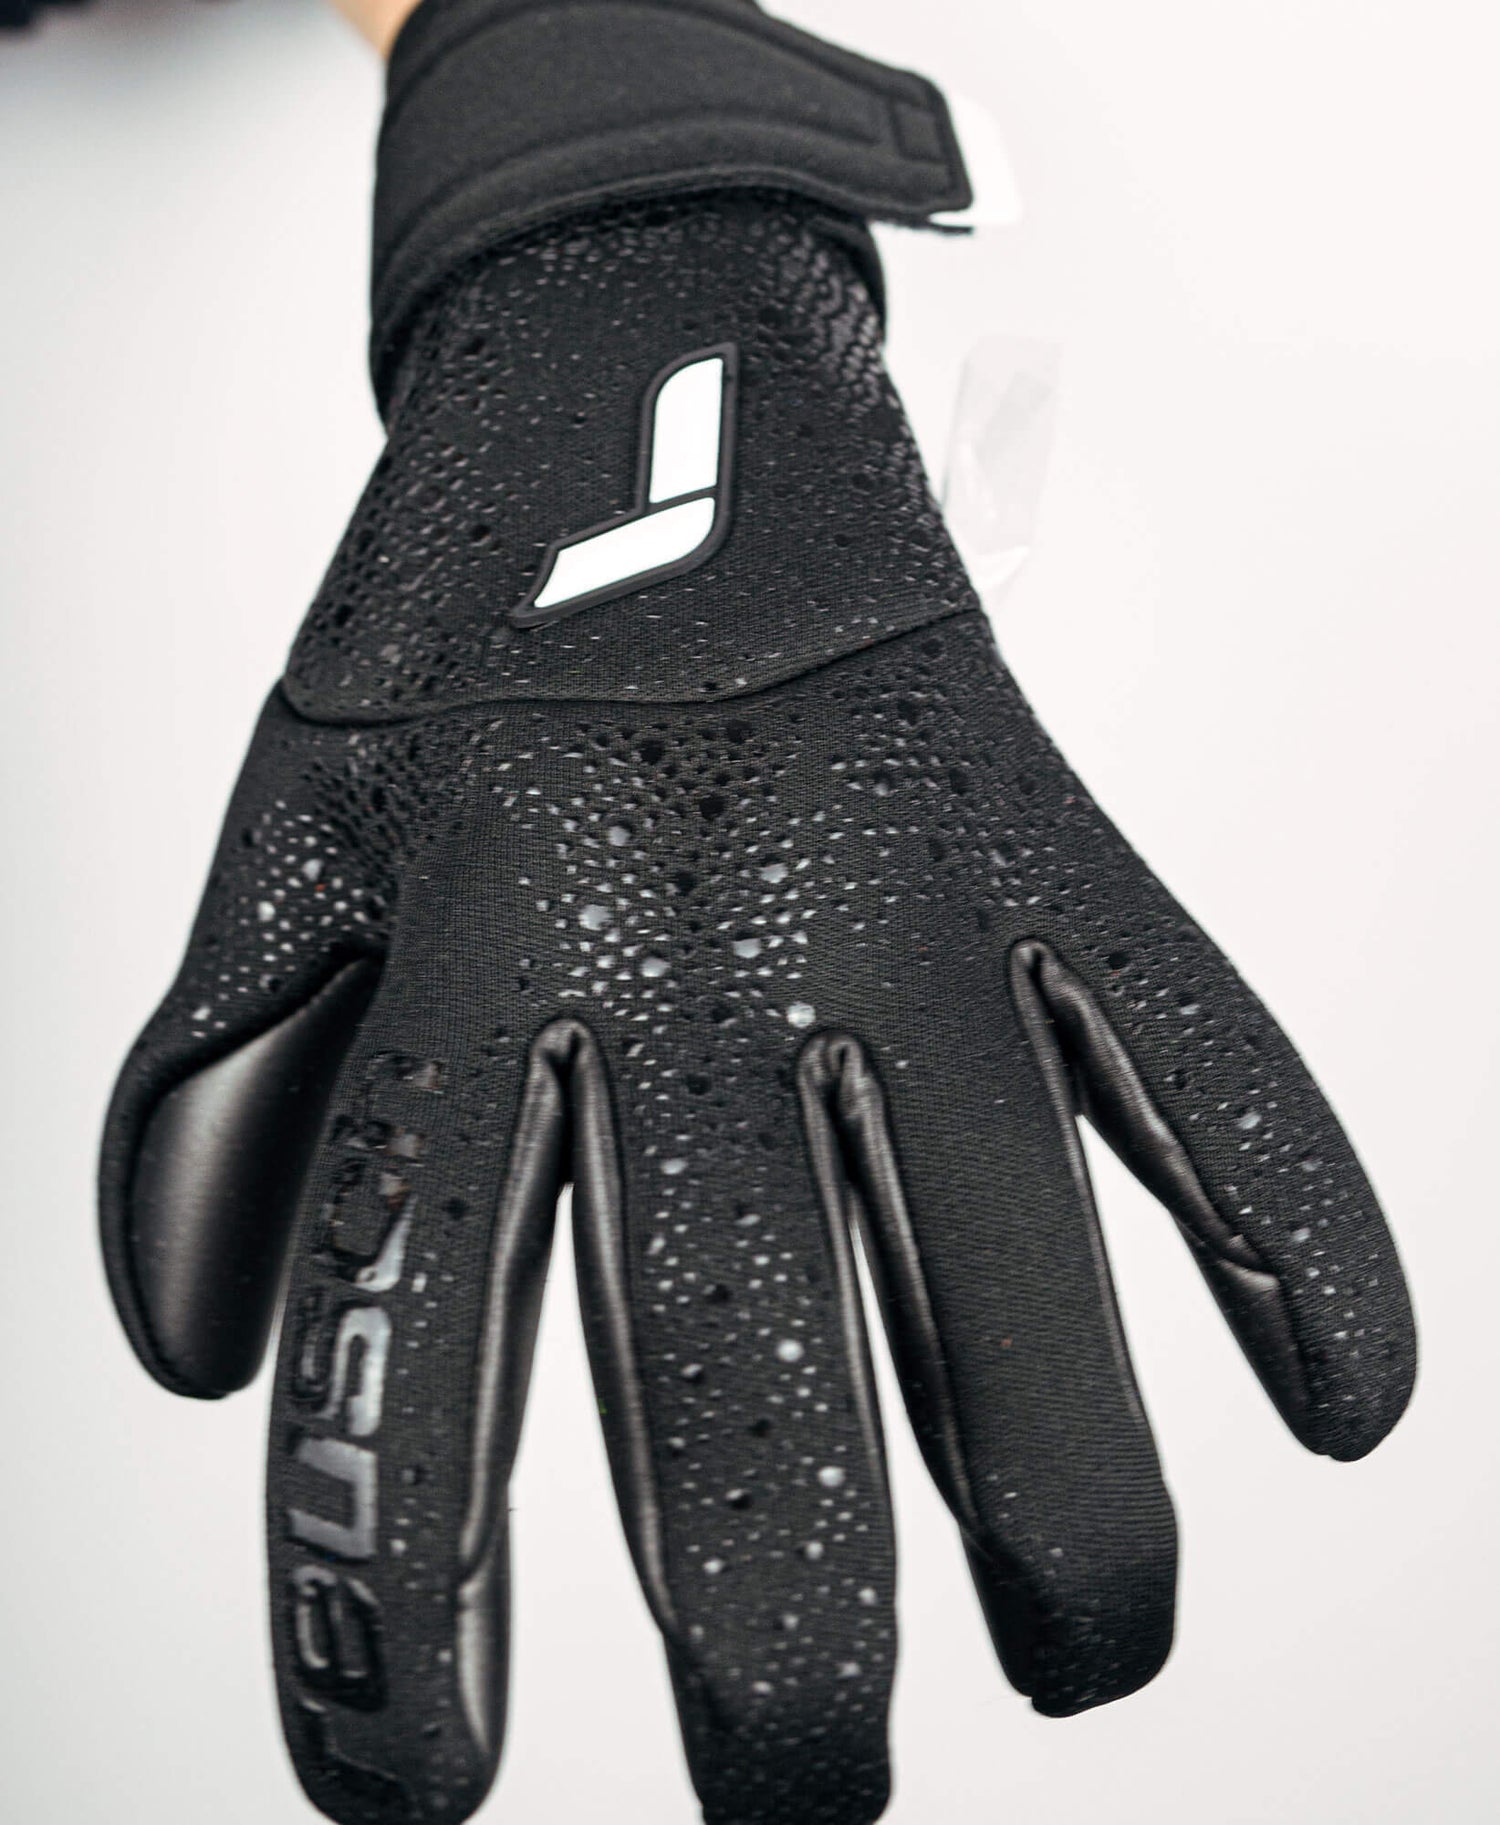 Reusch Pure Contact Infinity Goalkeeper Gloves - Black-White (Detail 1)